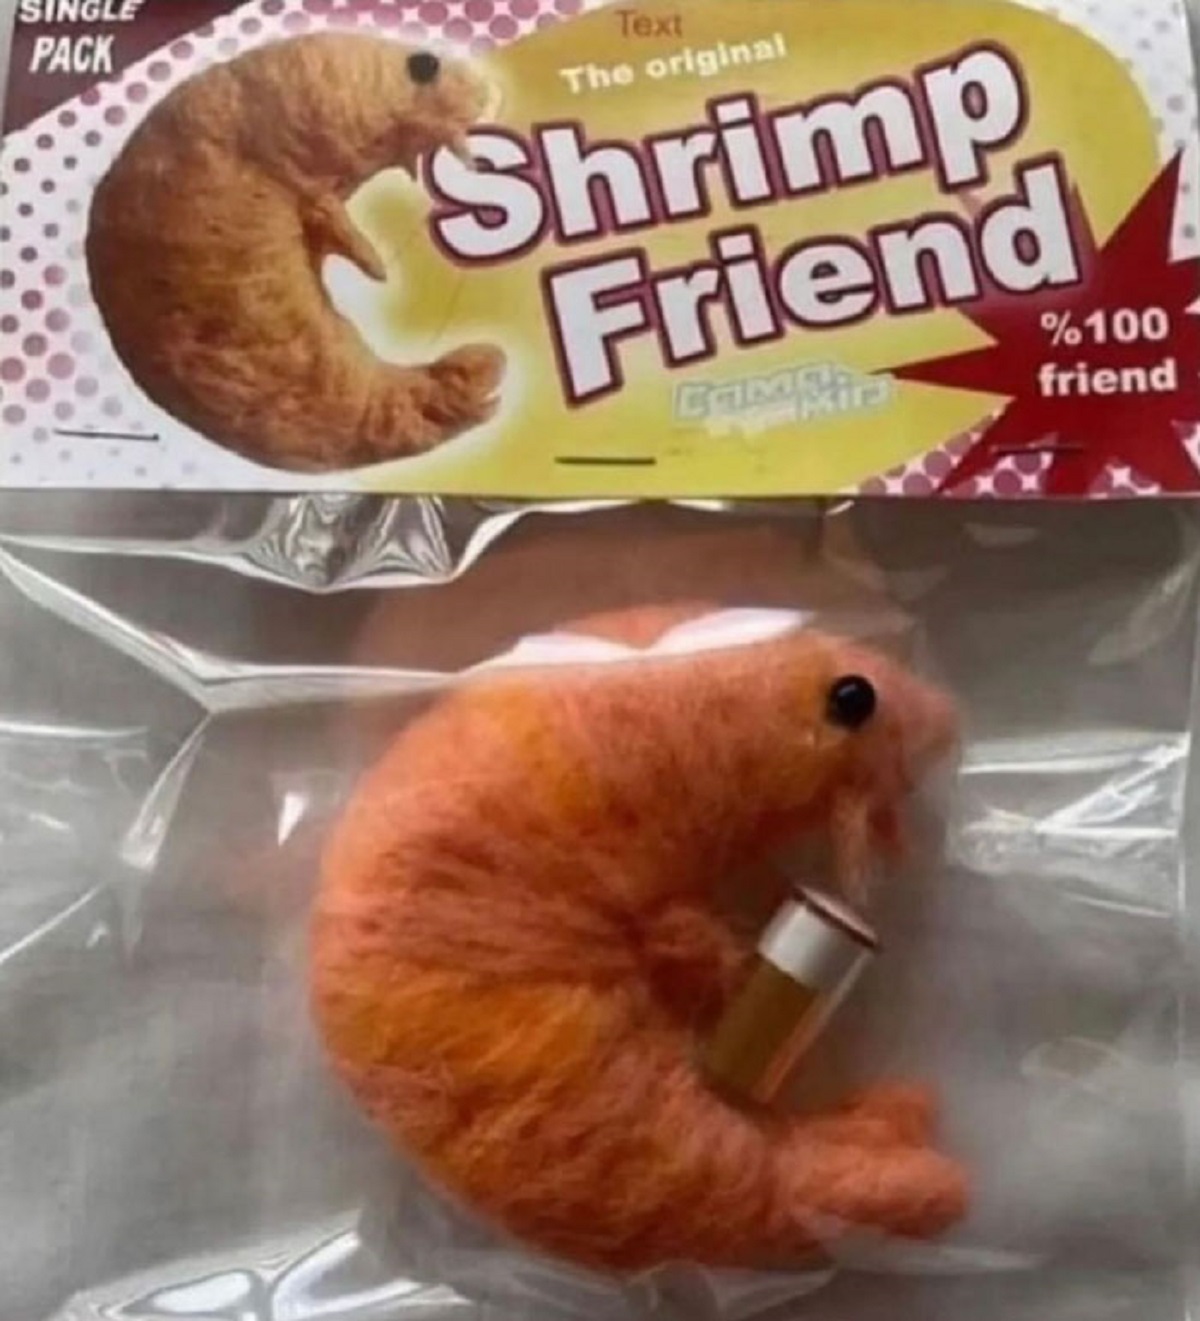 shrimp friend toy - Single Pack Text The original Shrimp Friend Campi %100 friend